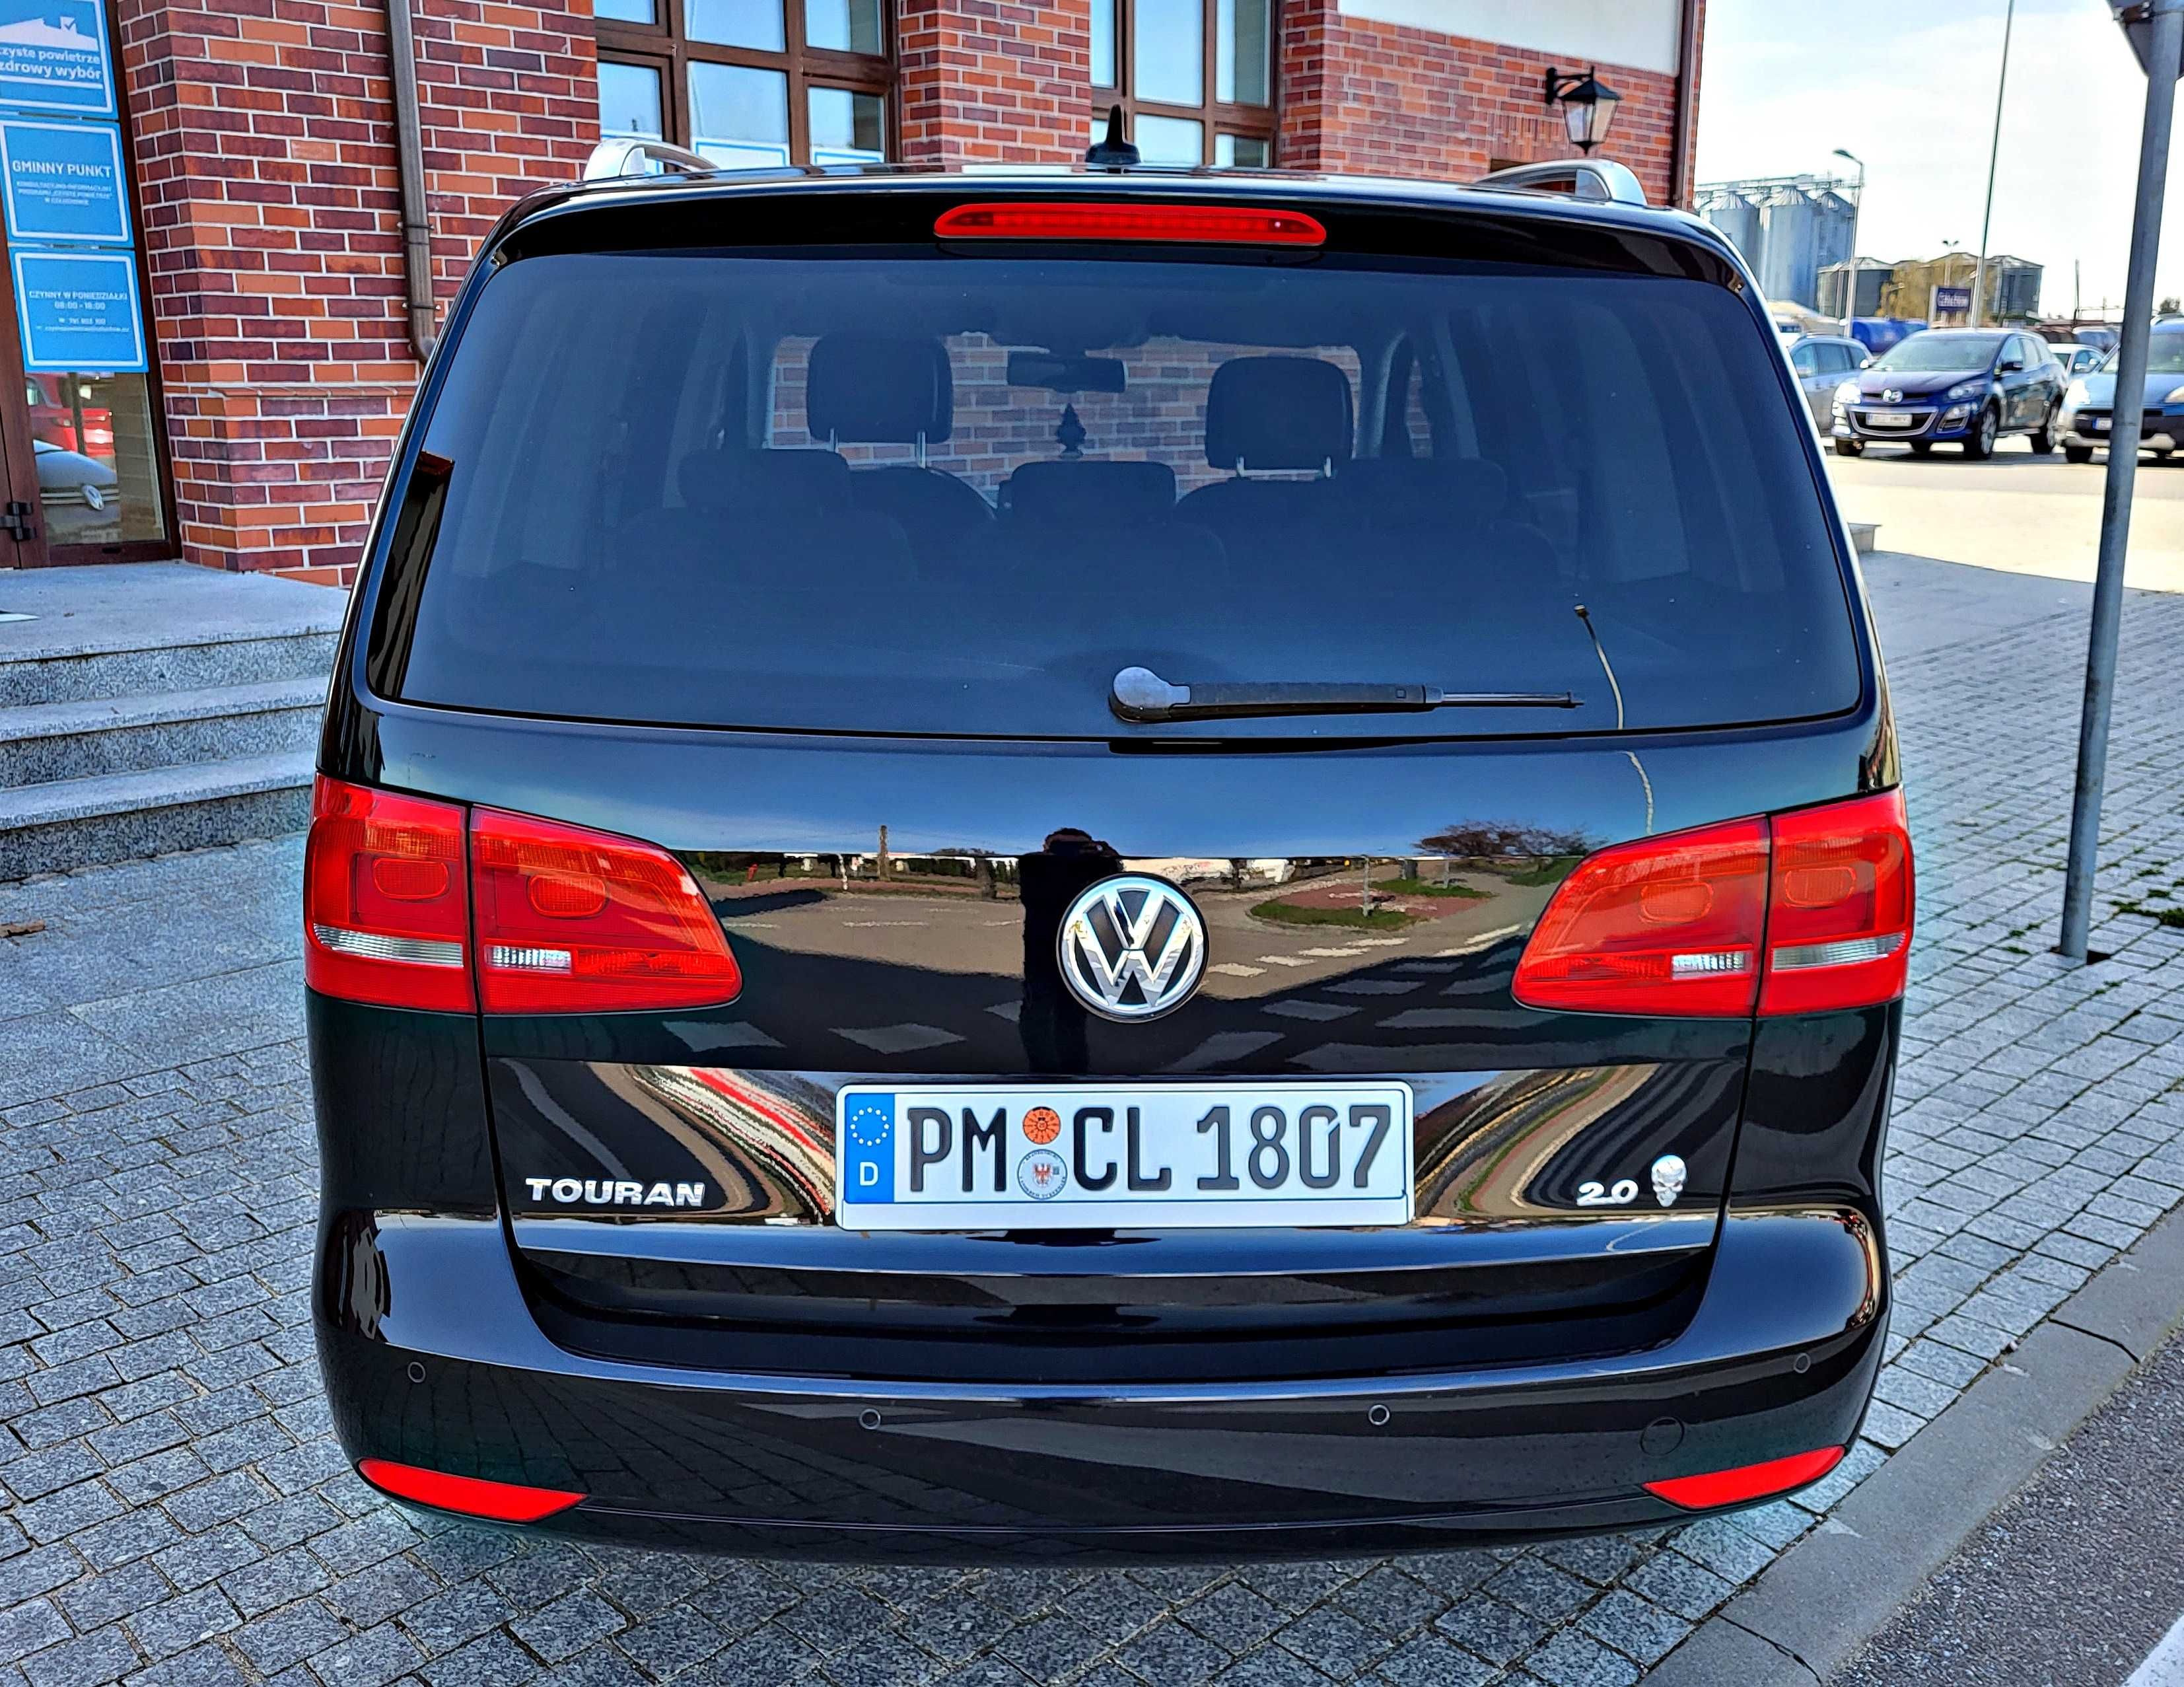 Śliczny Volkswagen Touran 2014  2.0 TDI 170 km DSG Panorama Led Xenon